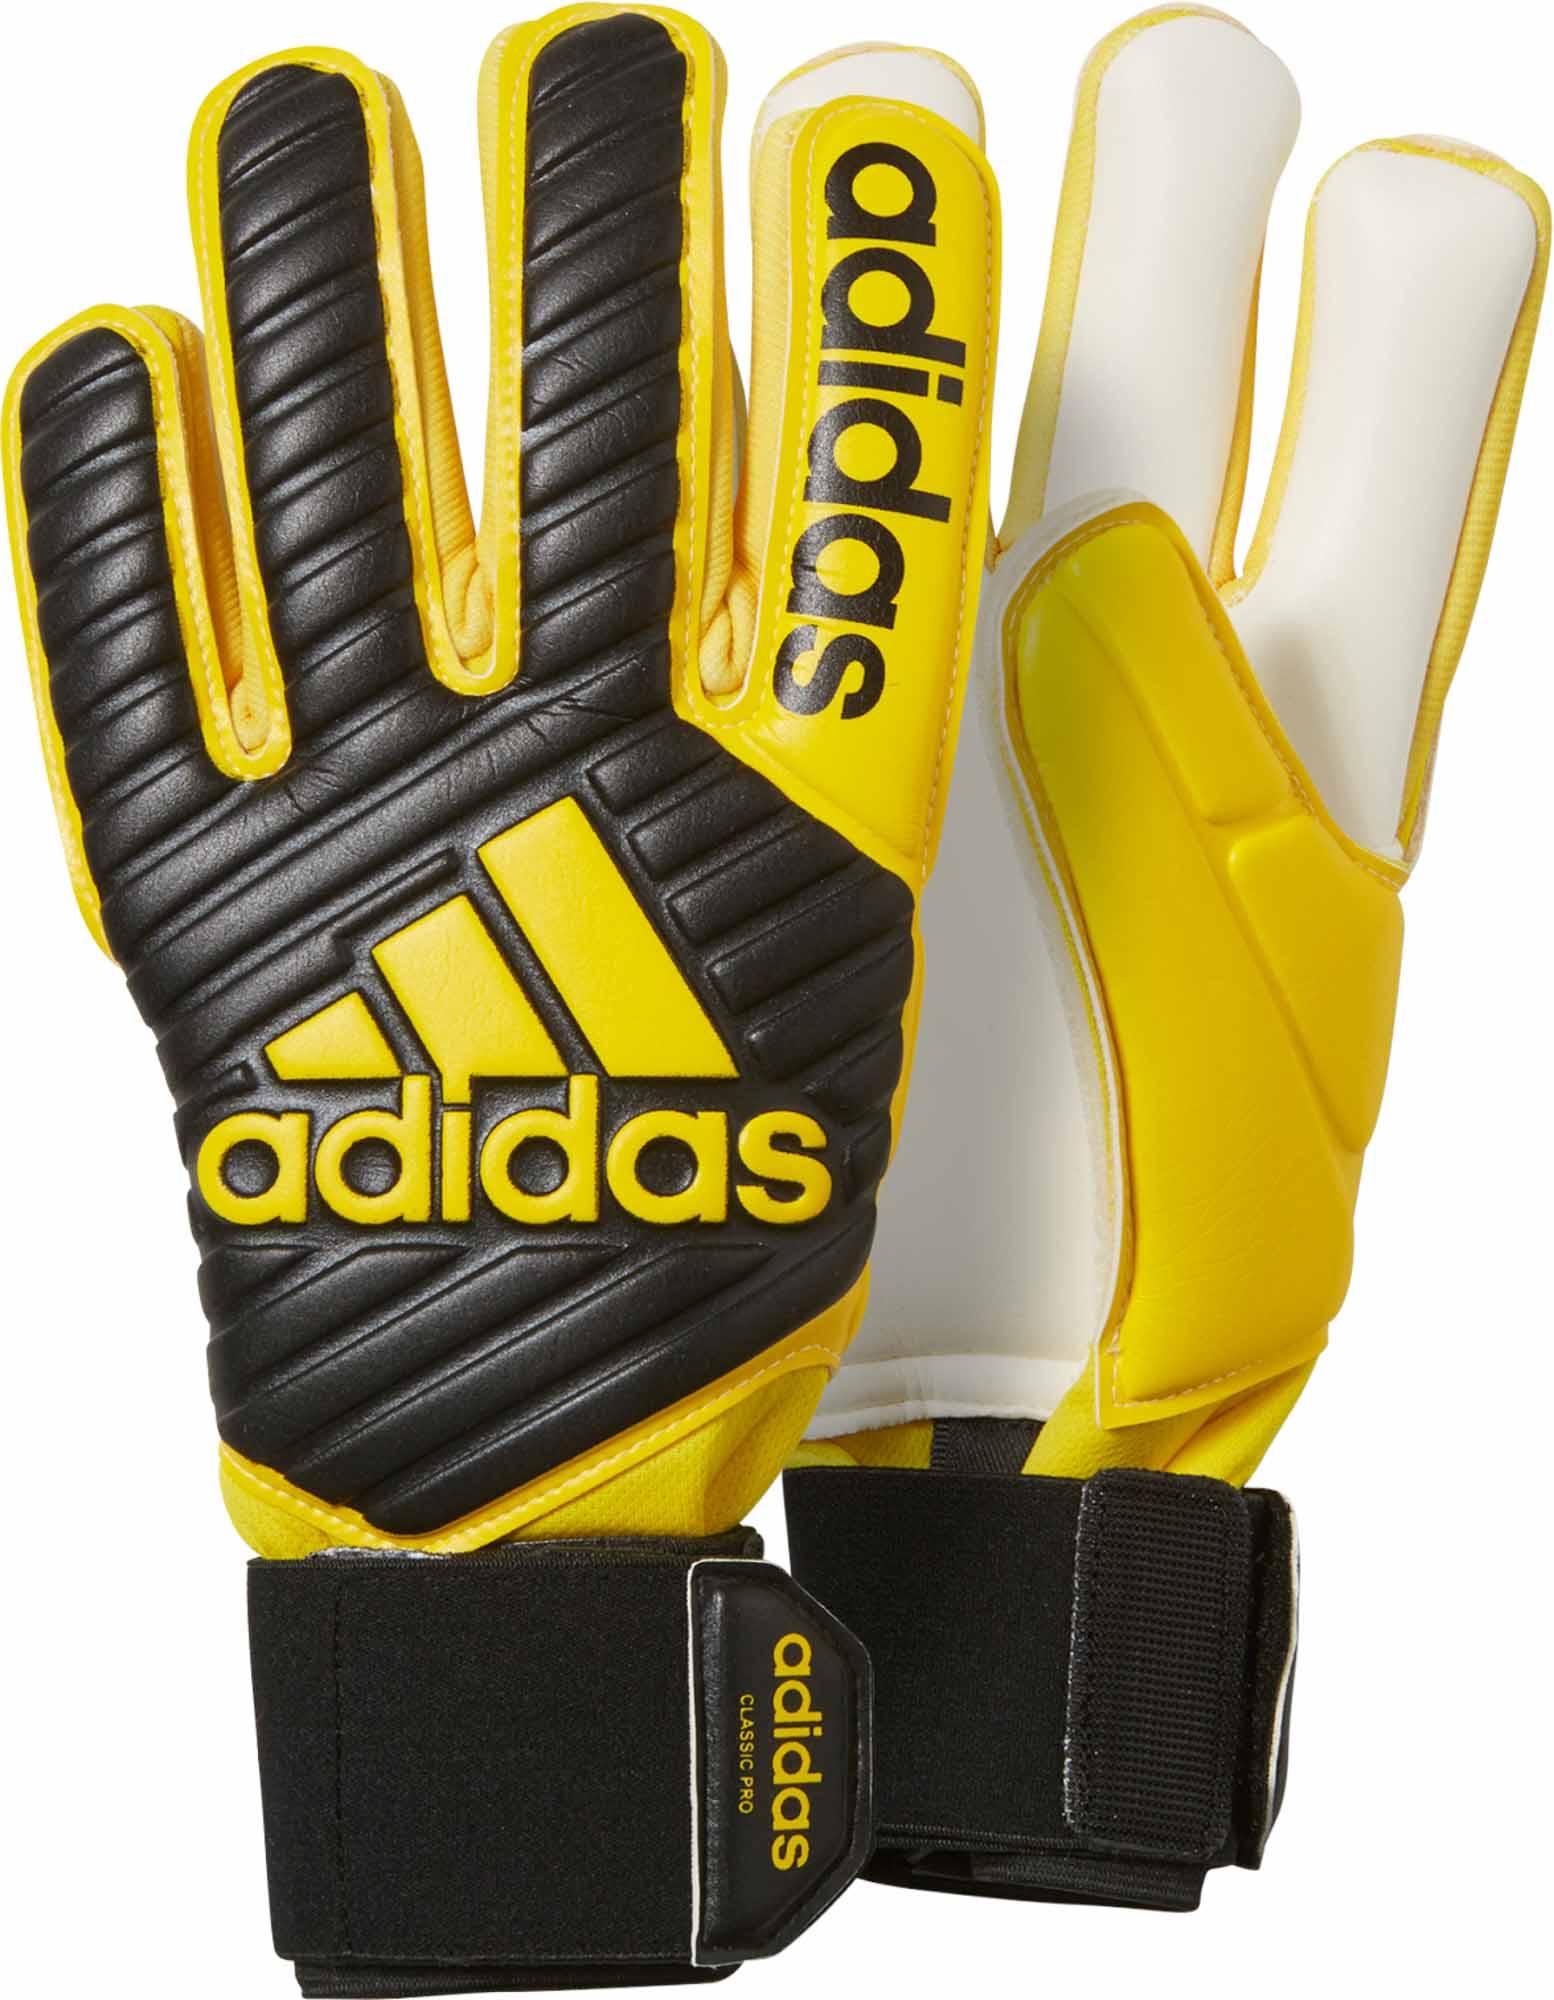 Goalkeeper Gloves Black/Yellow Size 7 